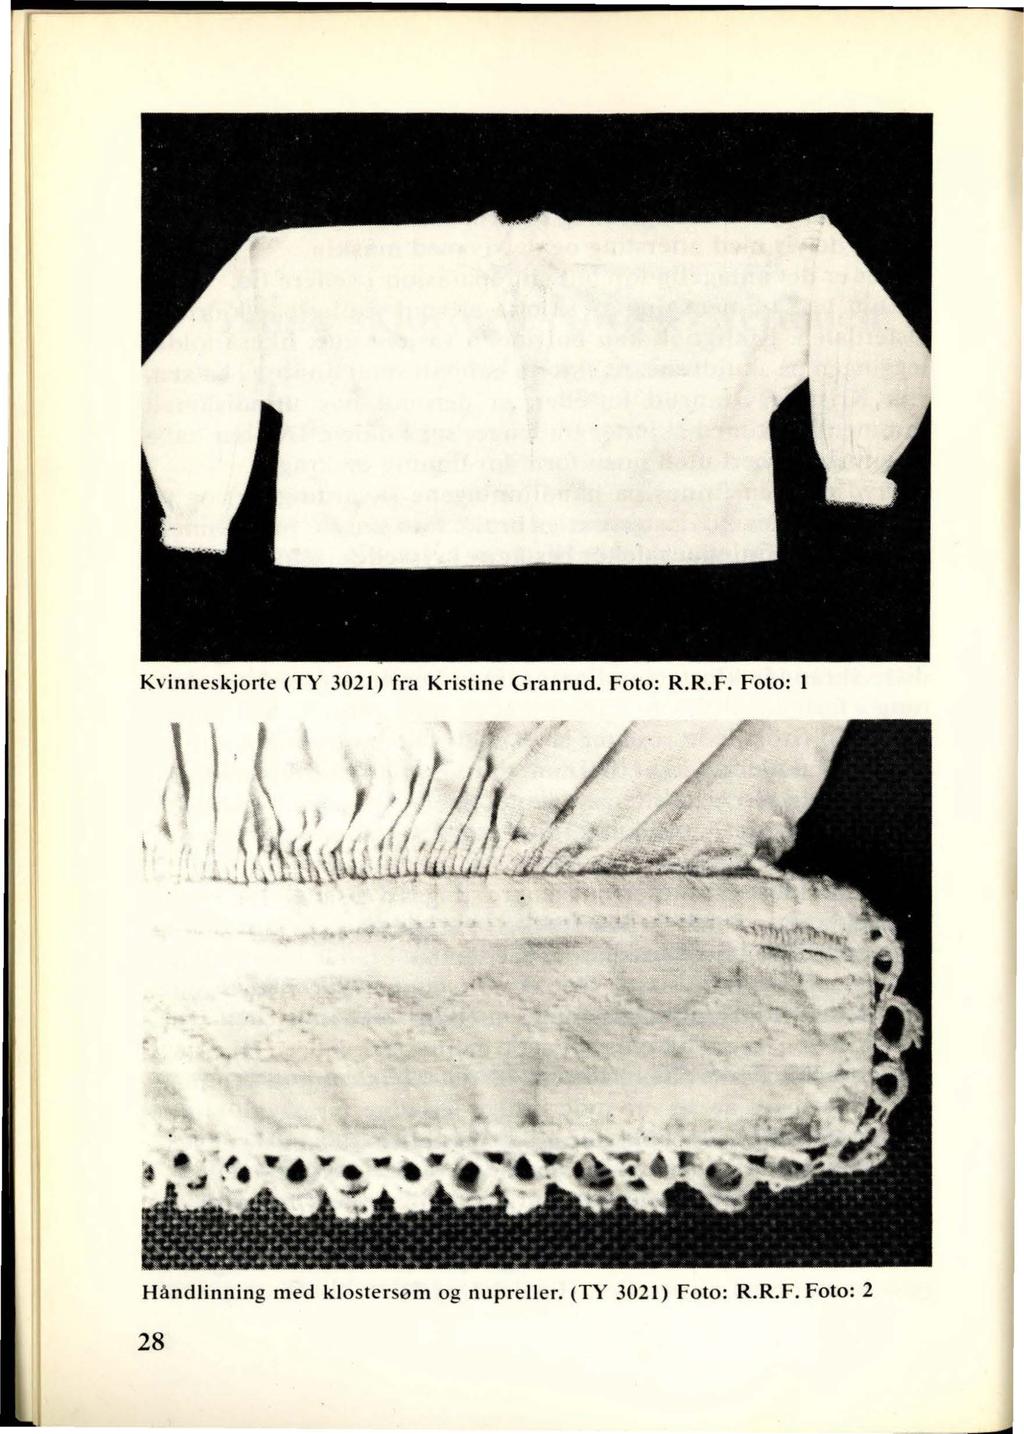 Kvinneskjorte (TY 3021) fra Kristine Granrud. Fo